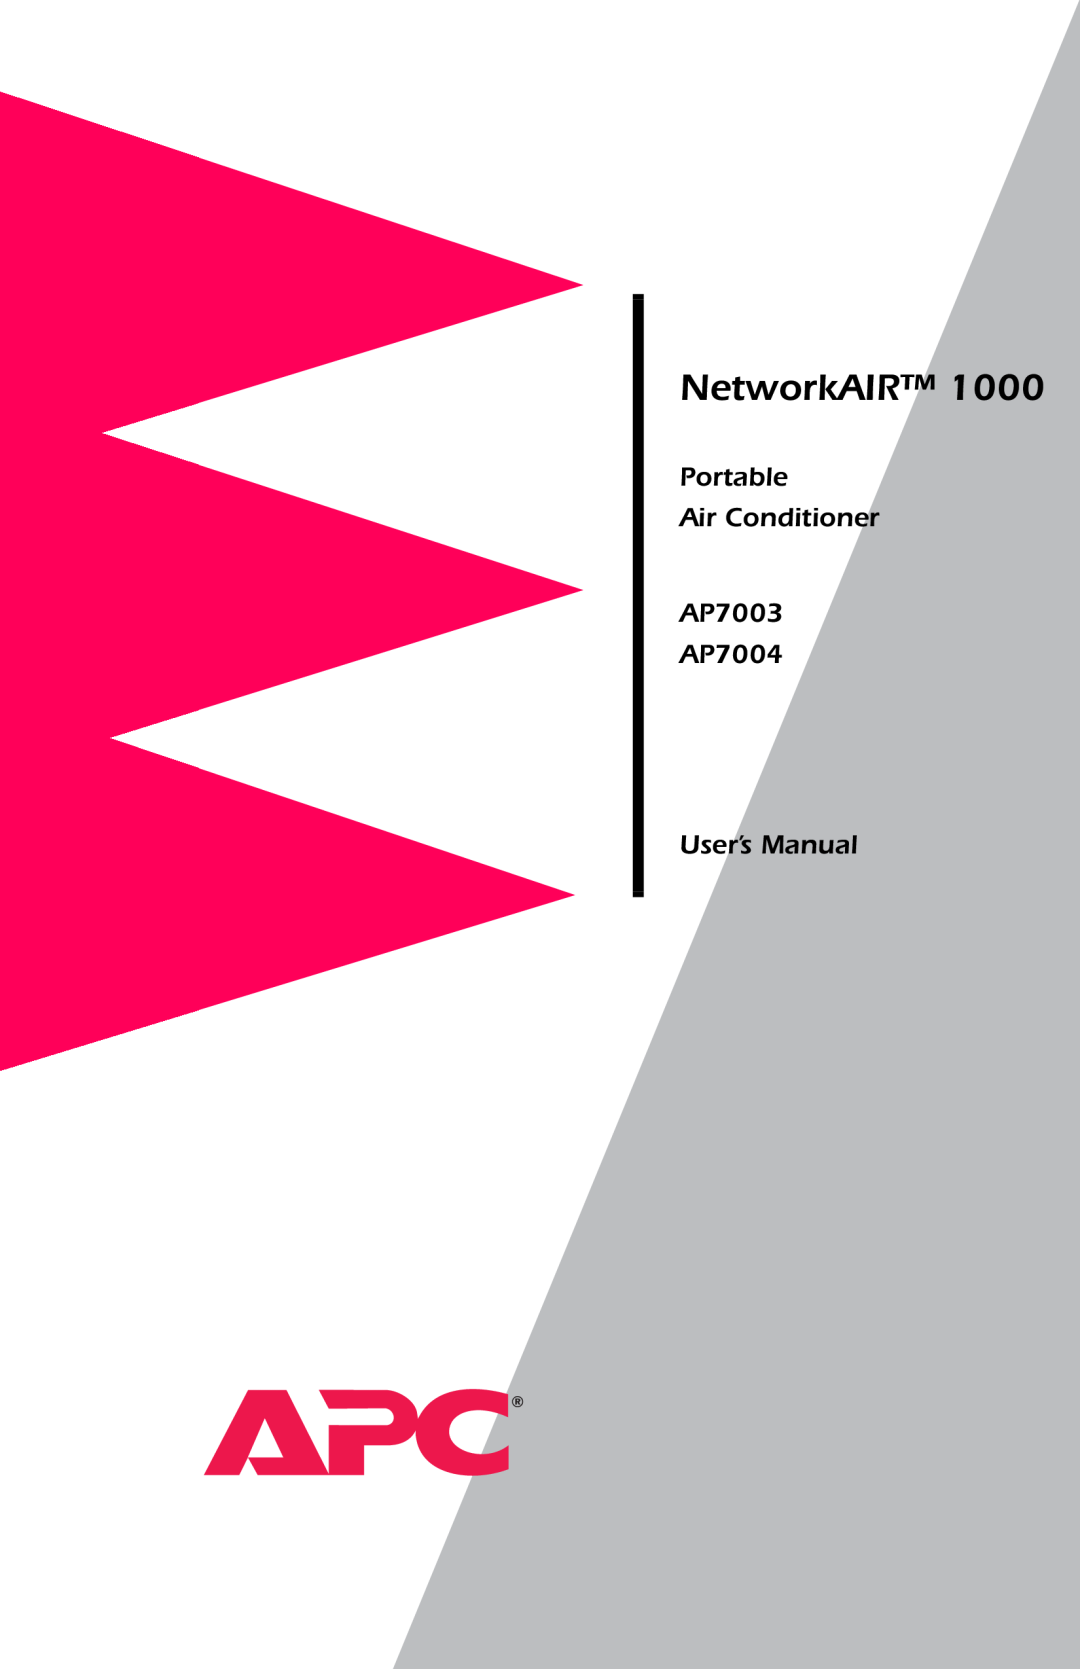 APC user manual NetworkAIR, Portable Air Conditioner AP7003 AP7004 